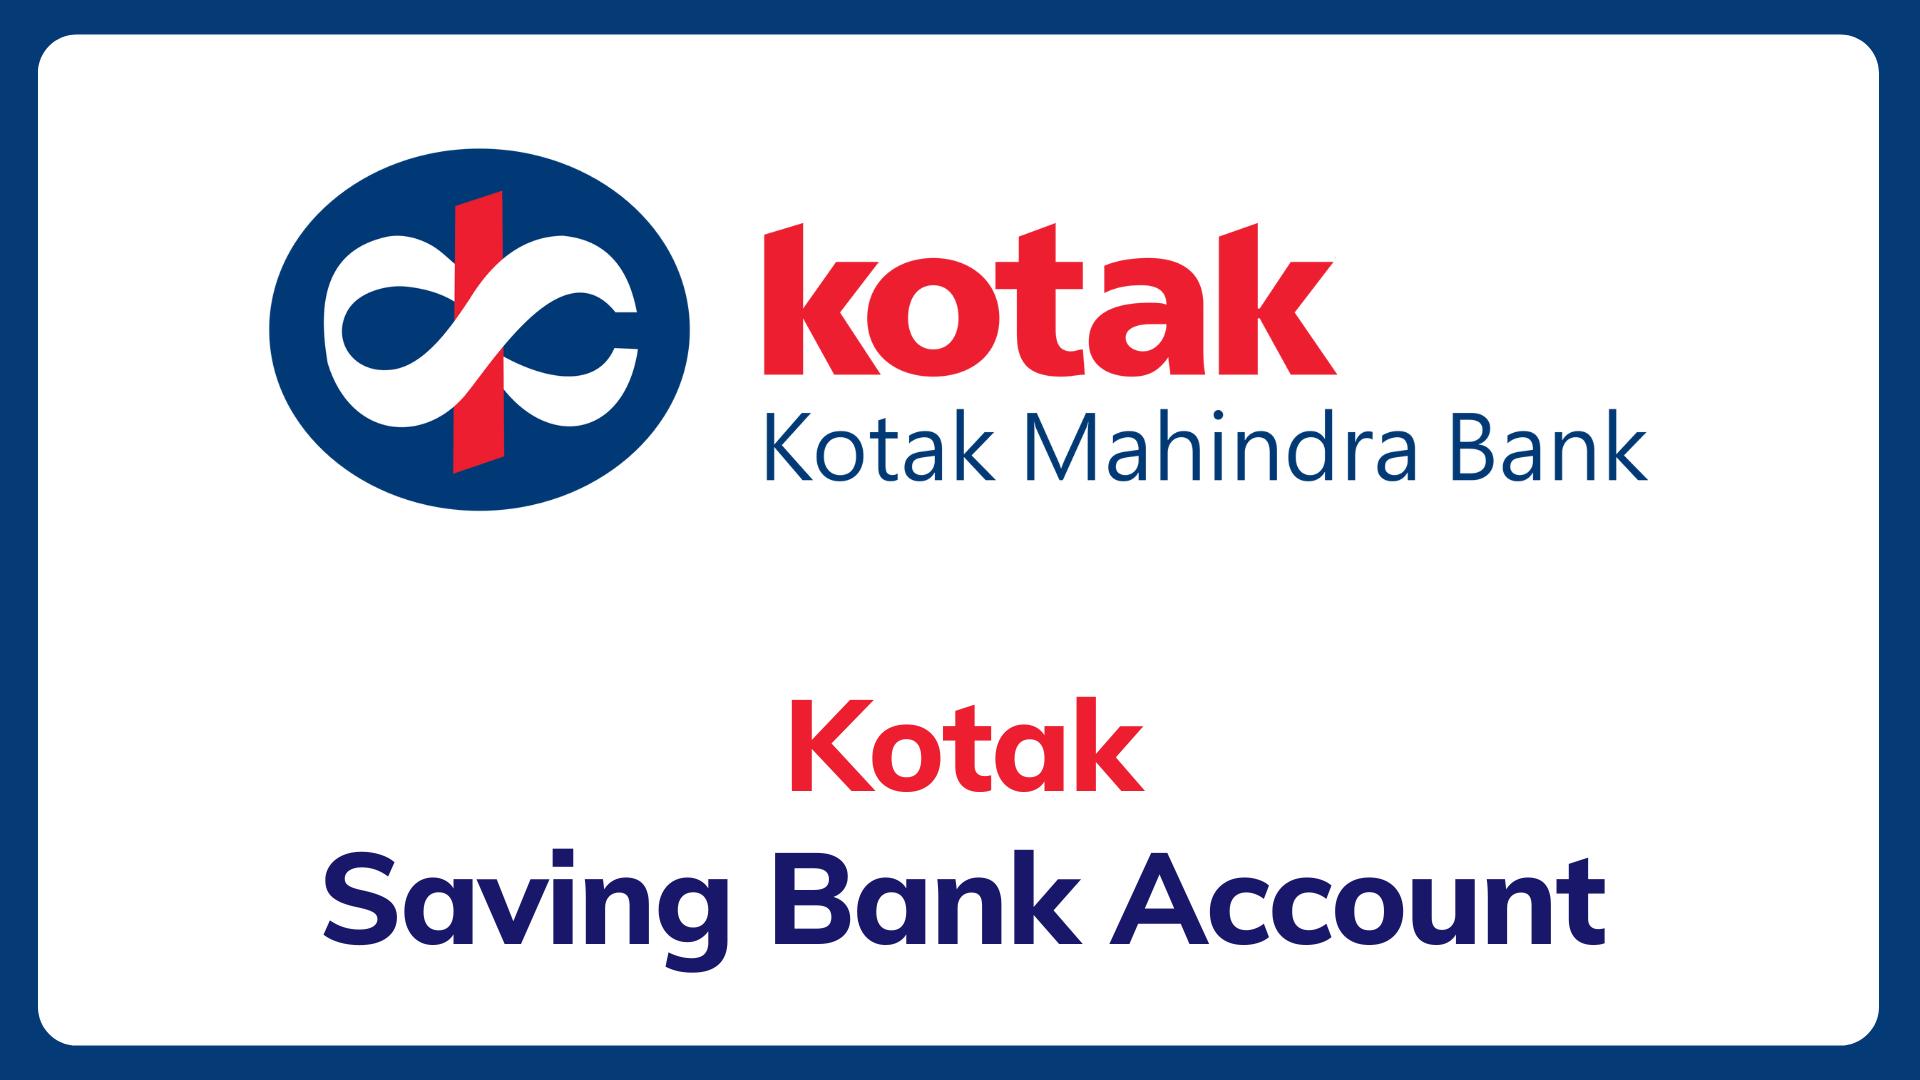 Kotak Mahindra Bank's Junior Saving Account